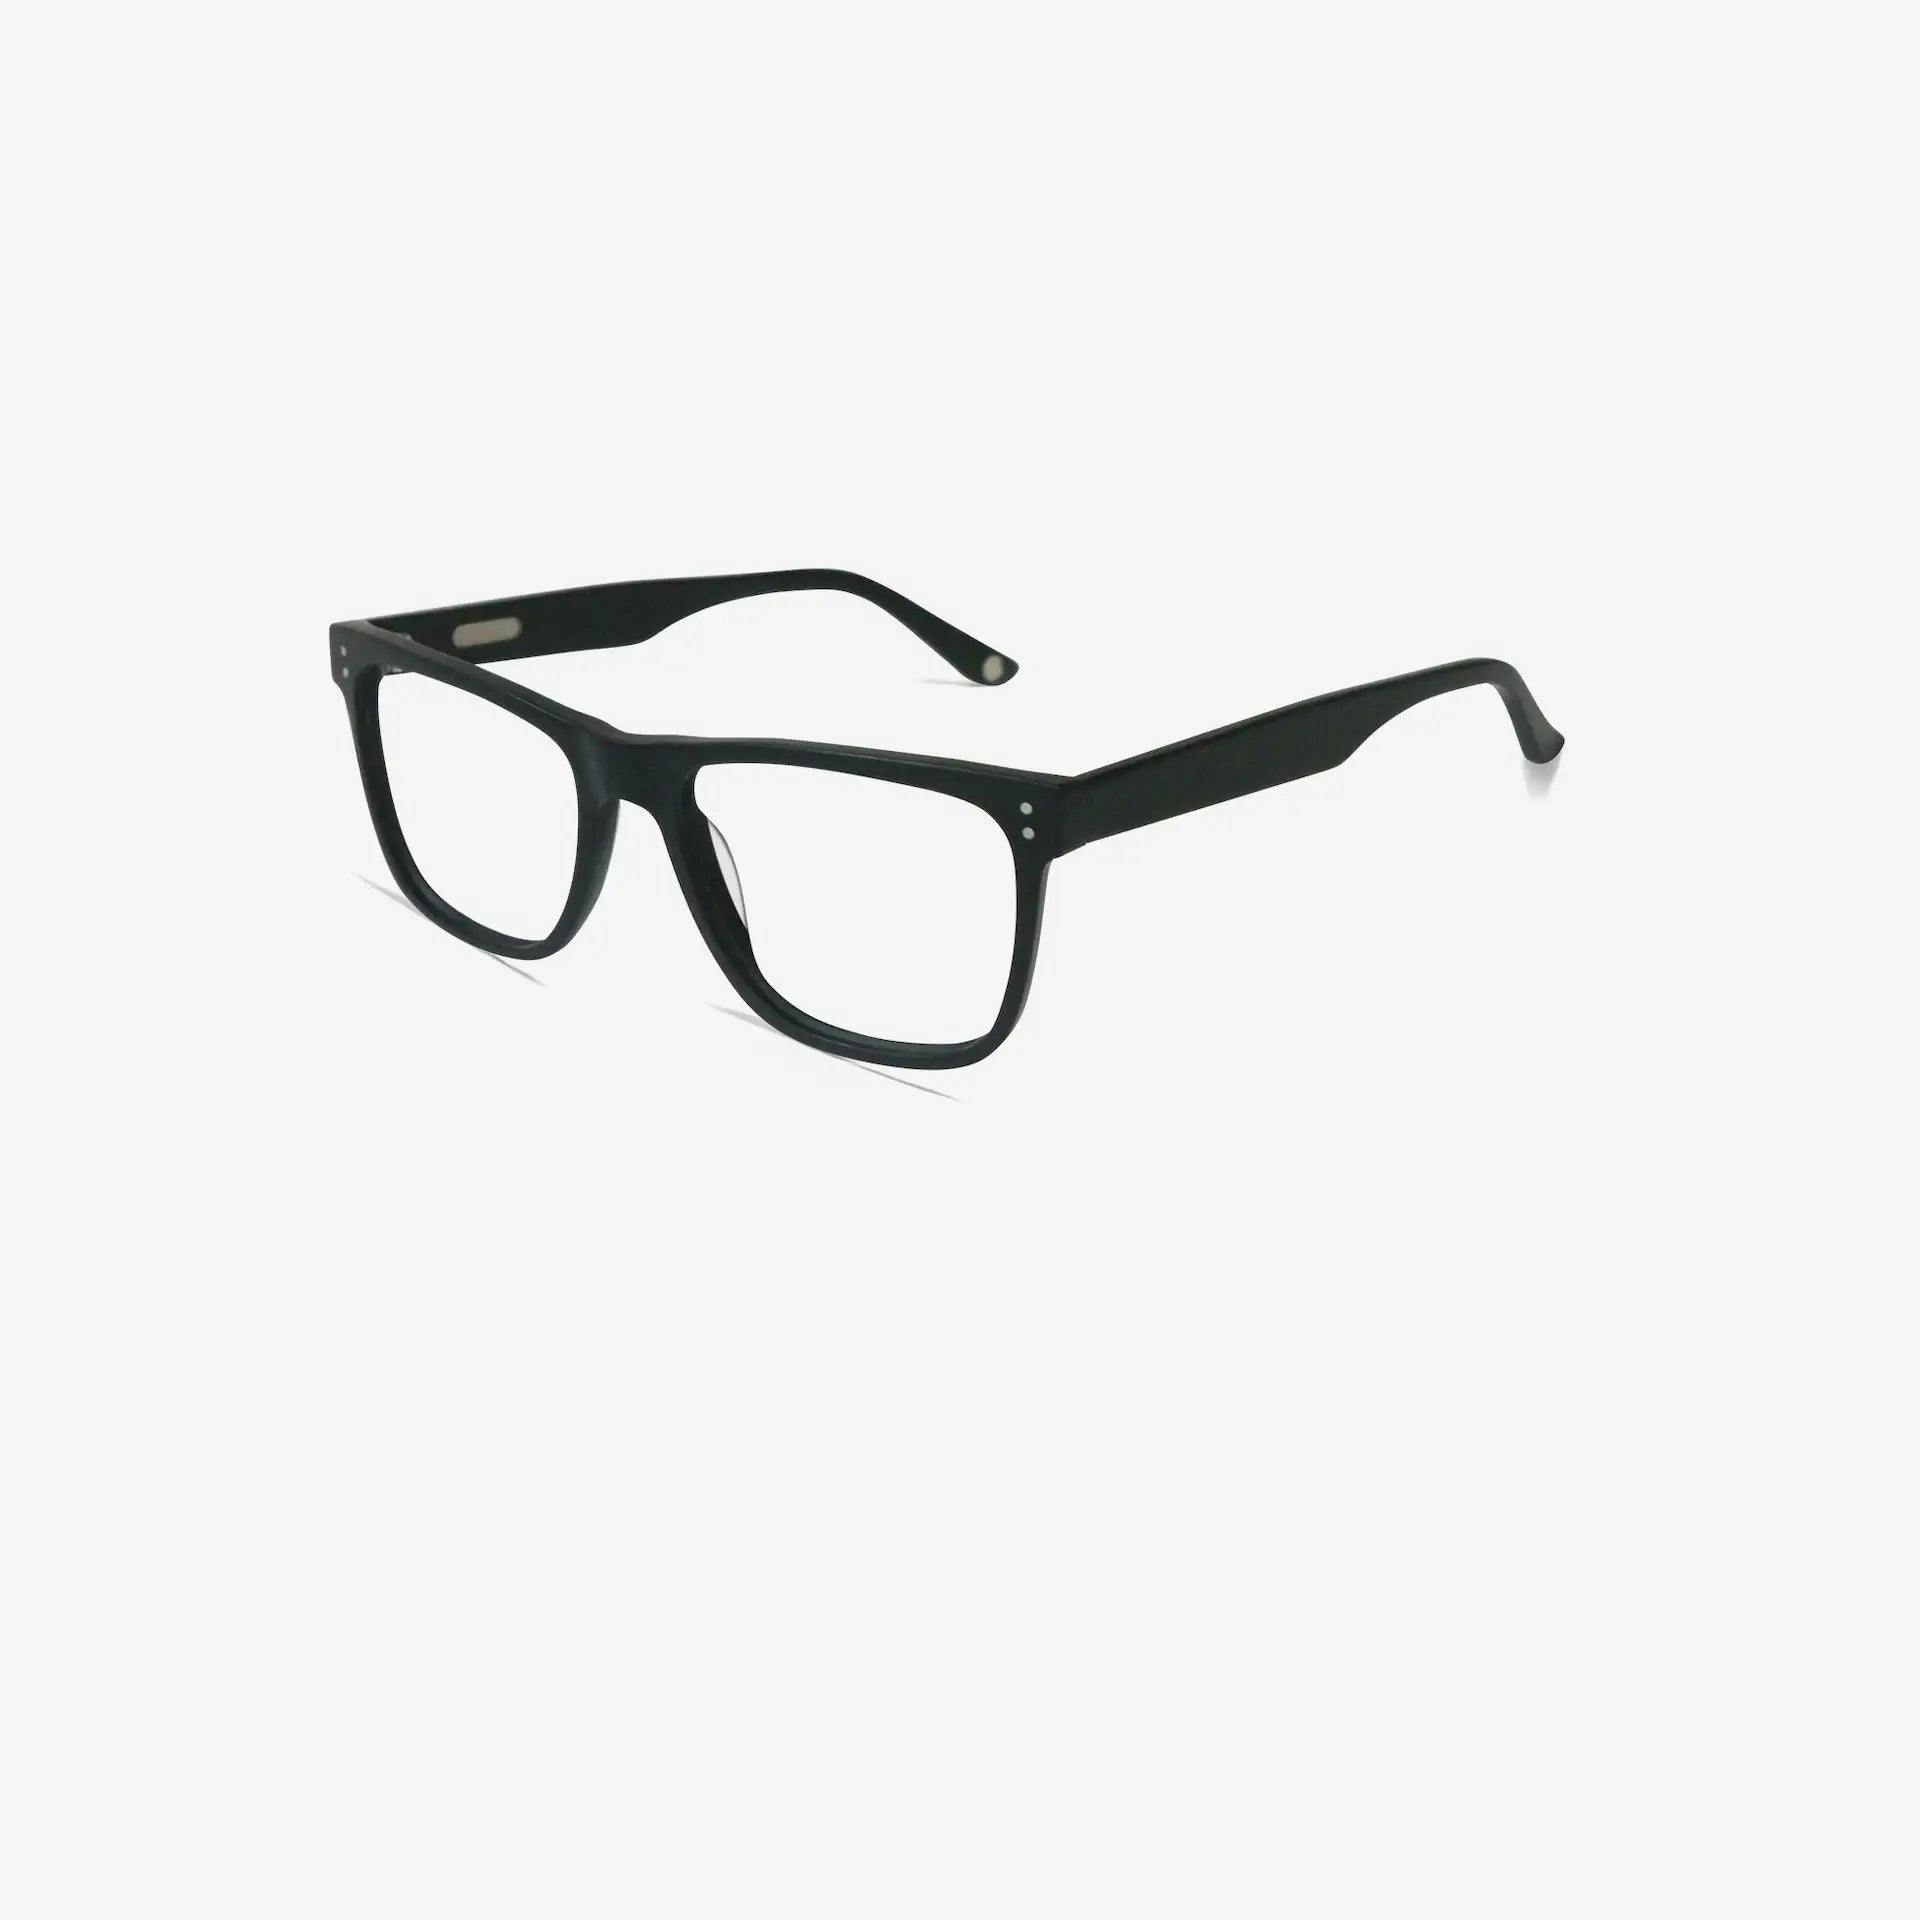 Huxley glasses | Fabes Black 